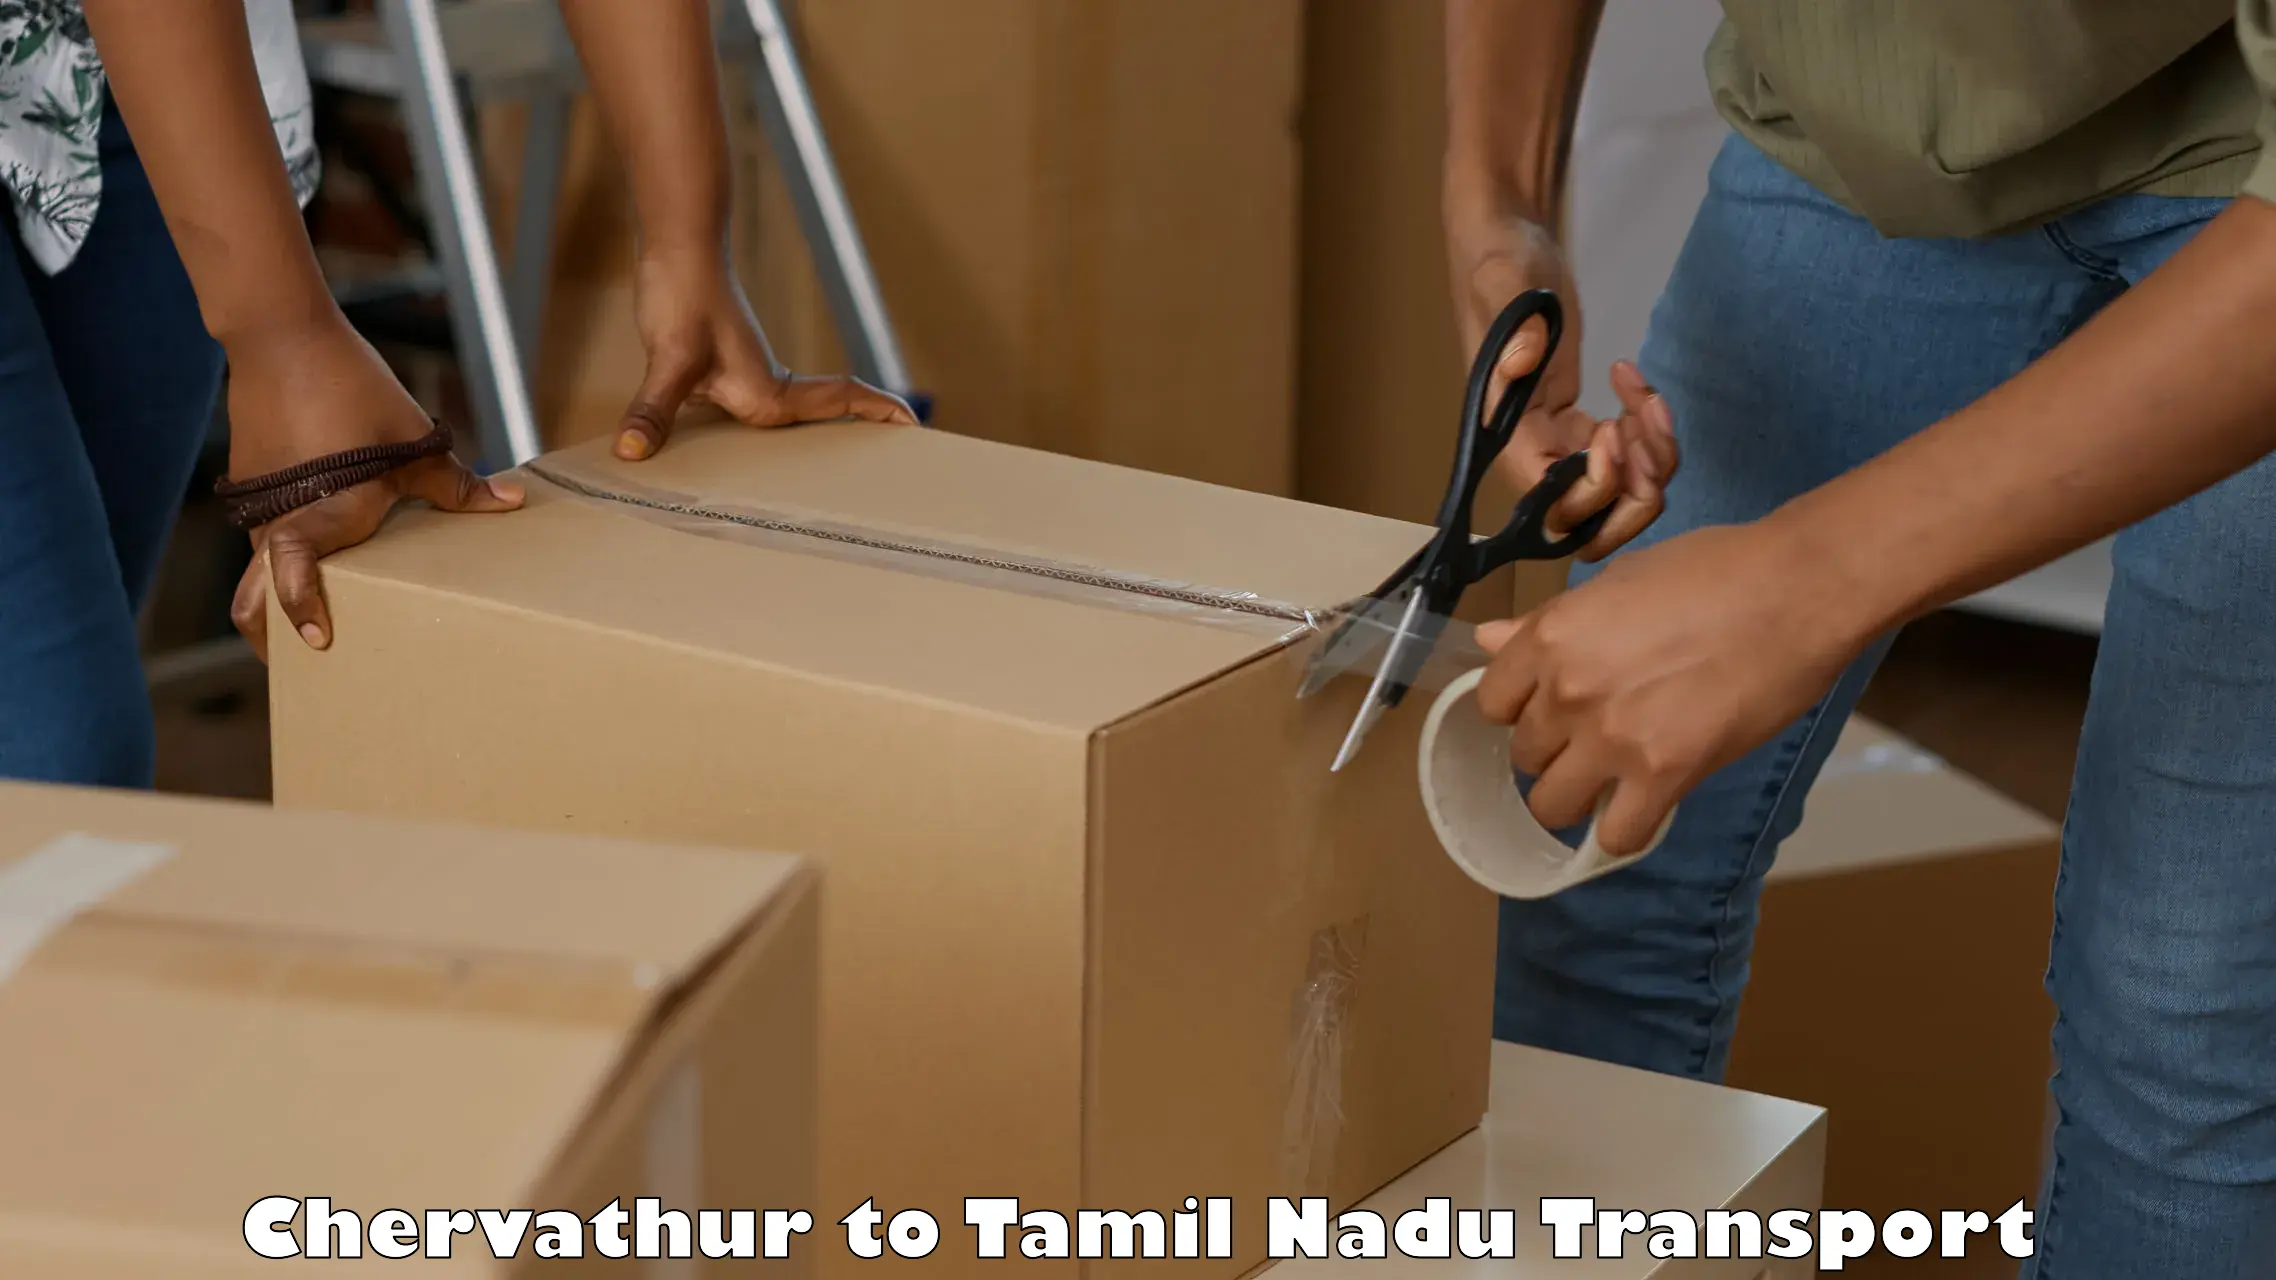 Logistics transportation services Chervathur to Paramakudi